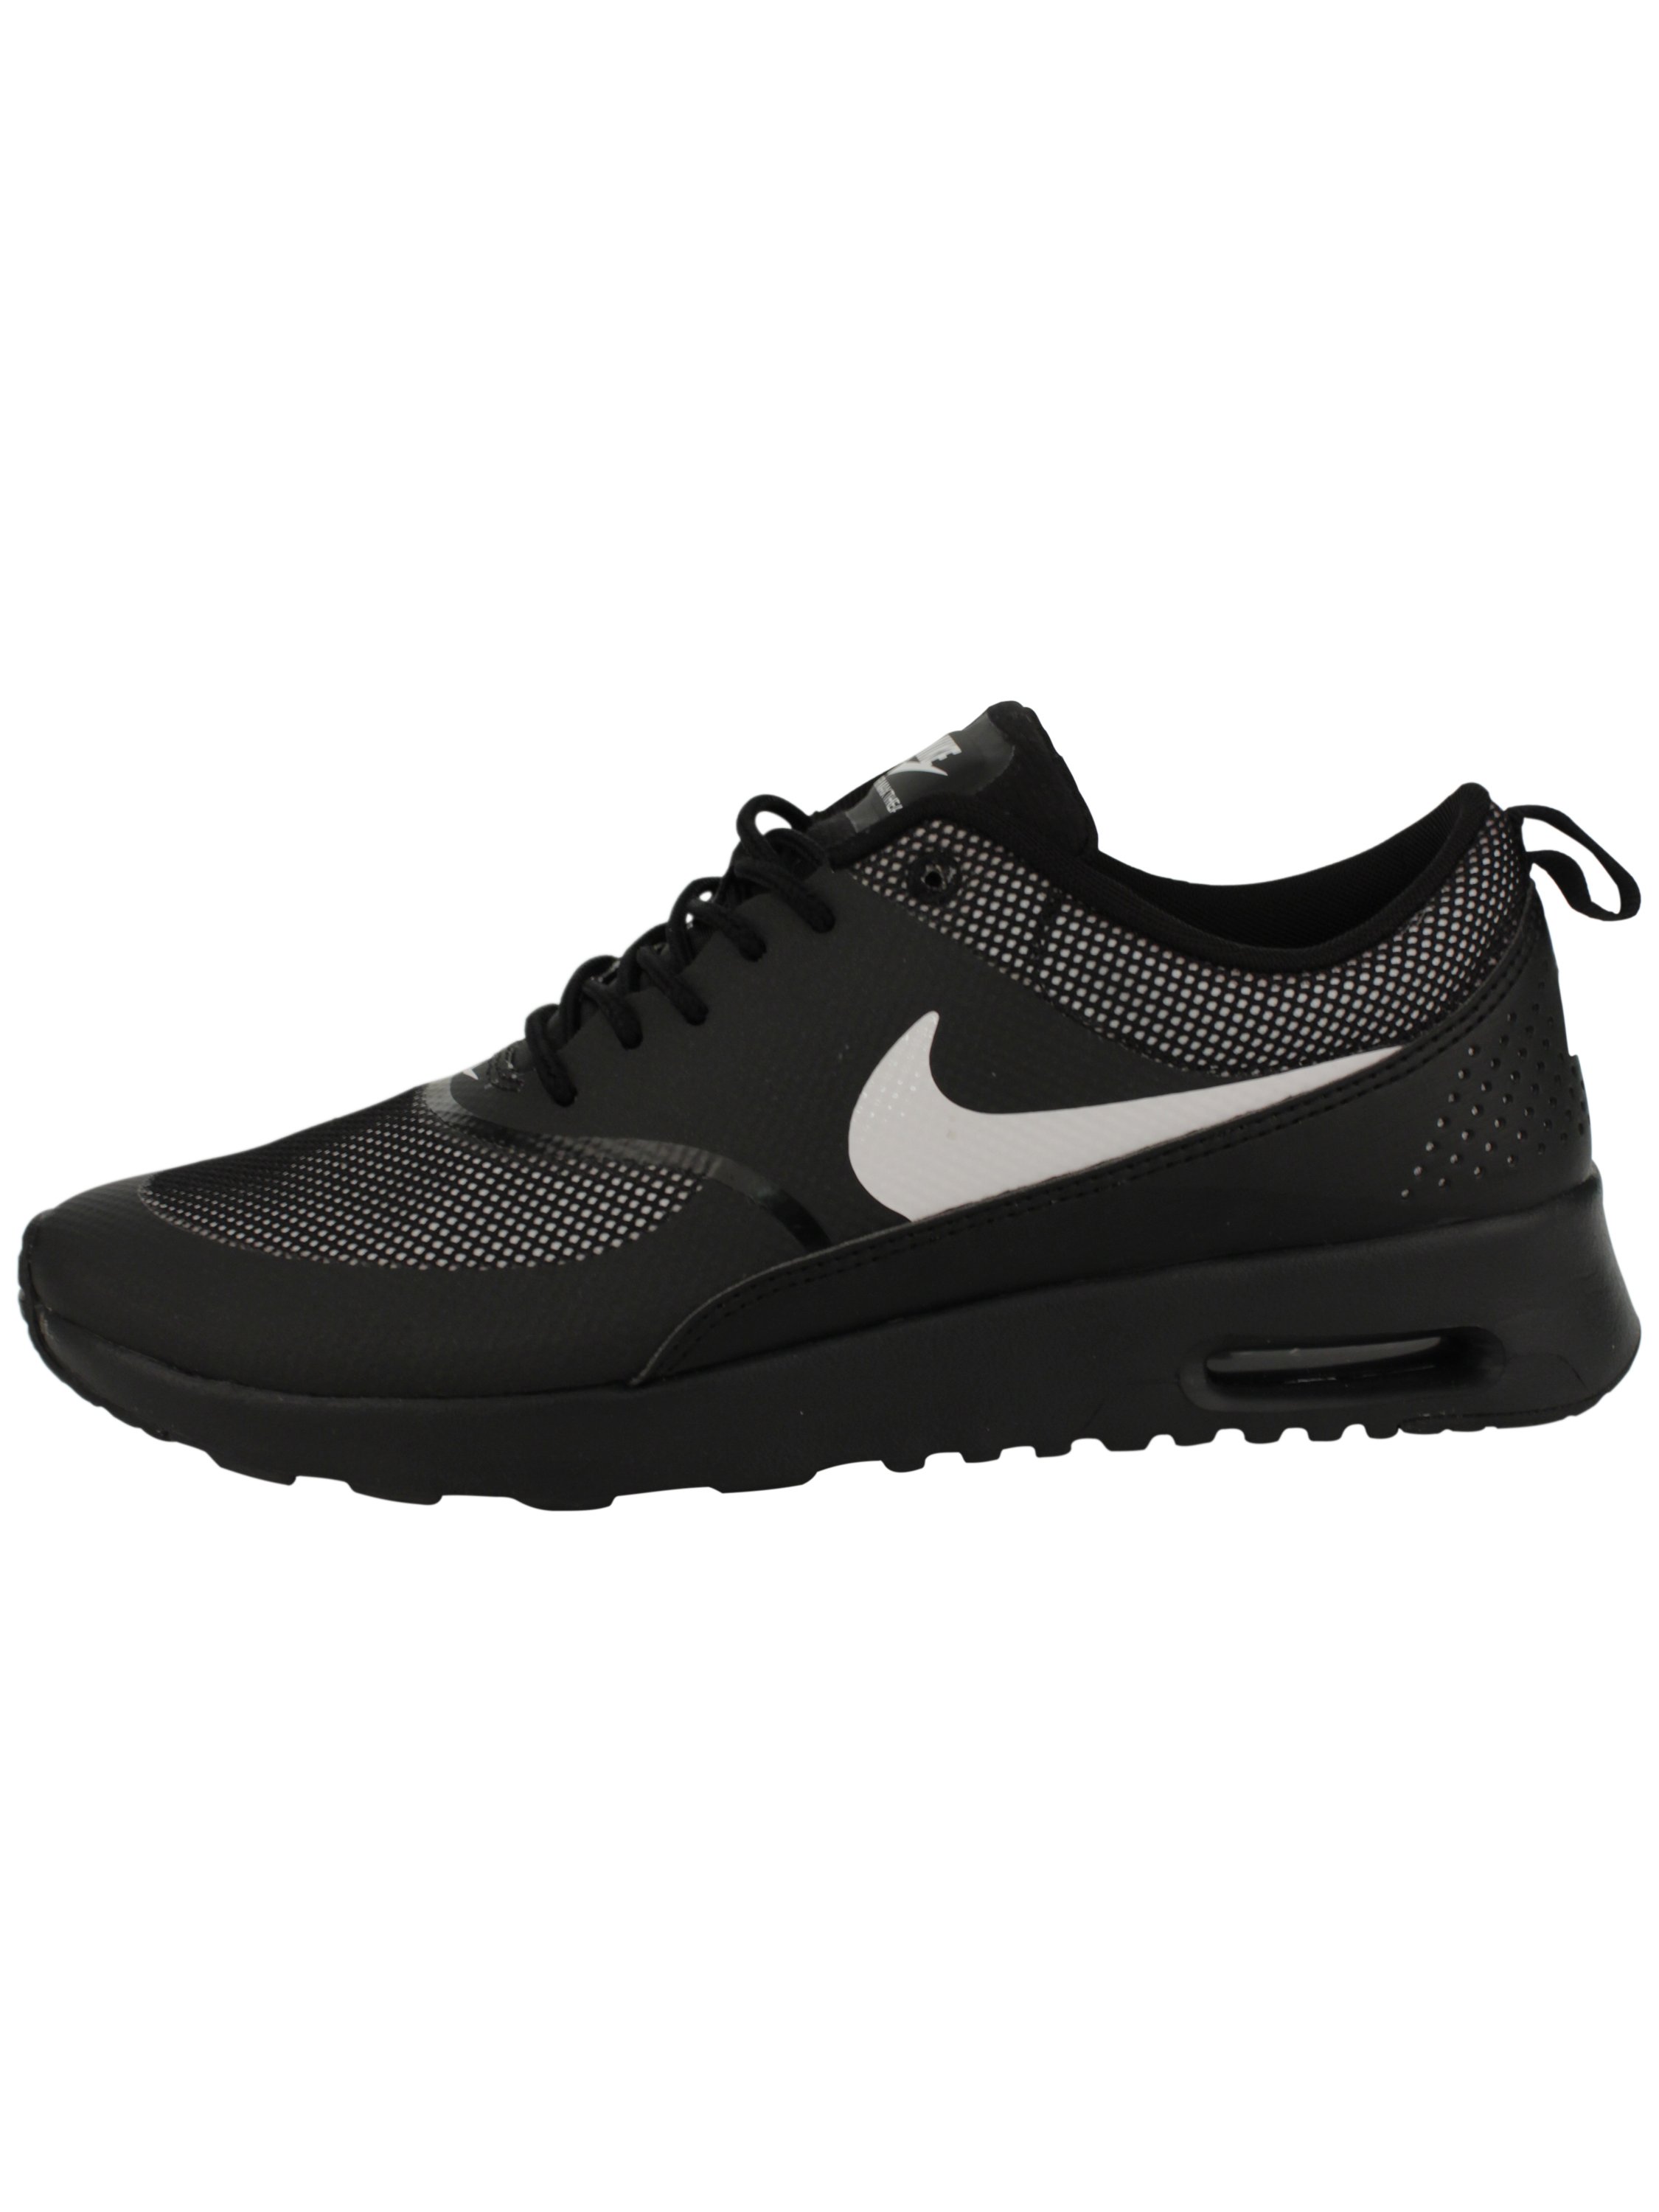 Kaupa Nike 'Air Max Thea' Shoes - Black